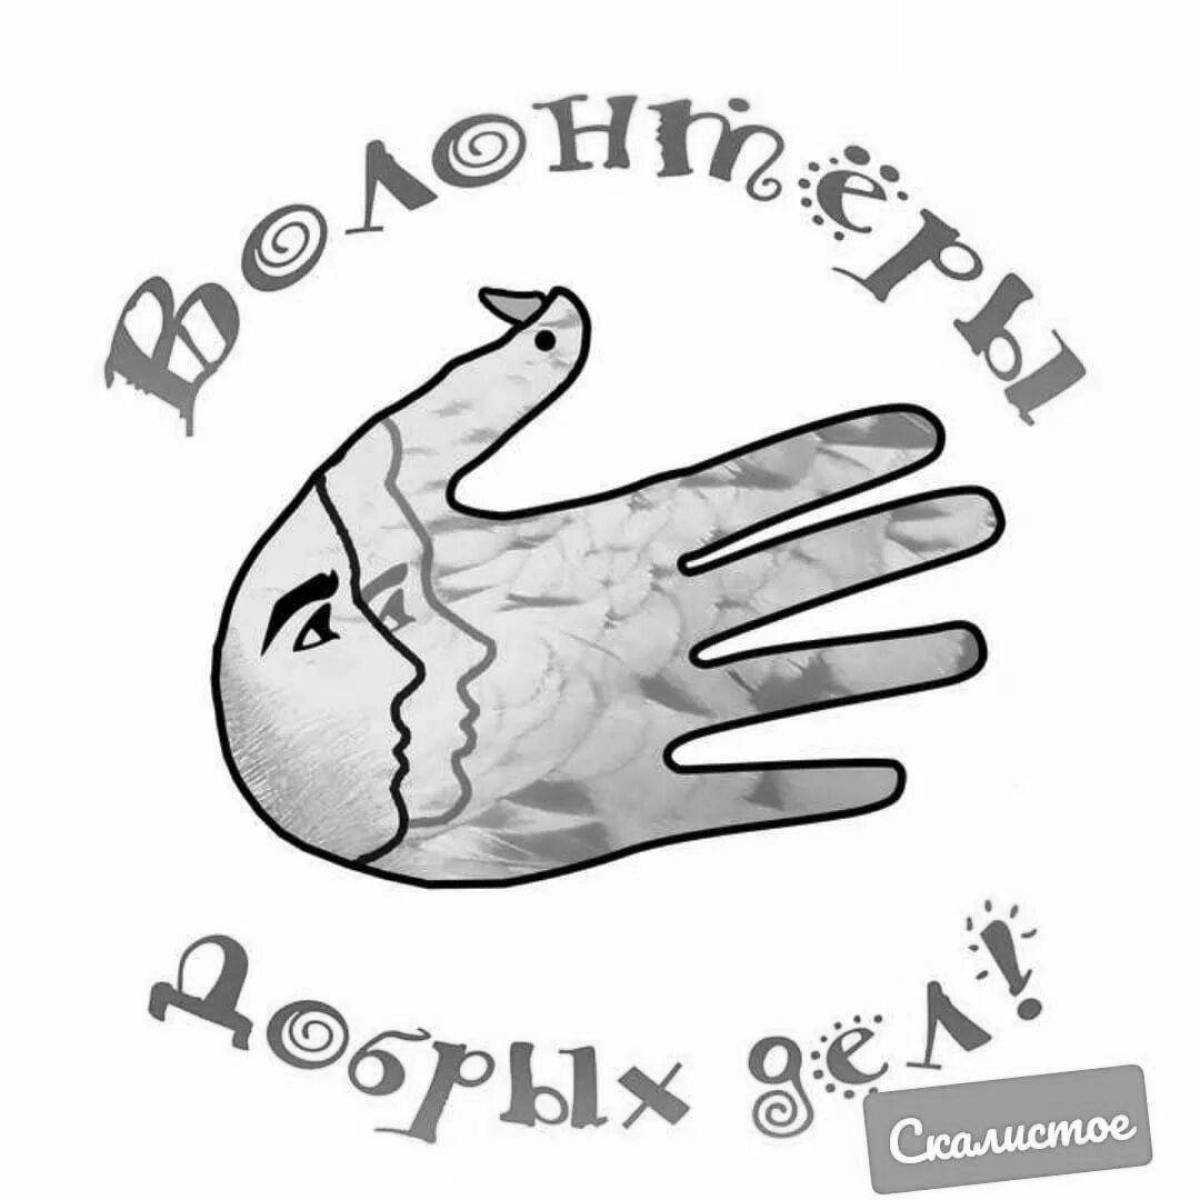 A bright symbol of volunteering in Russia